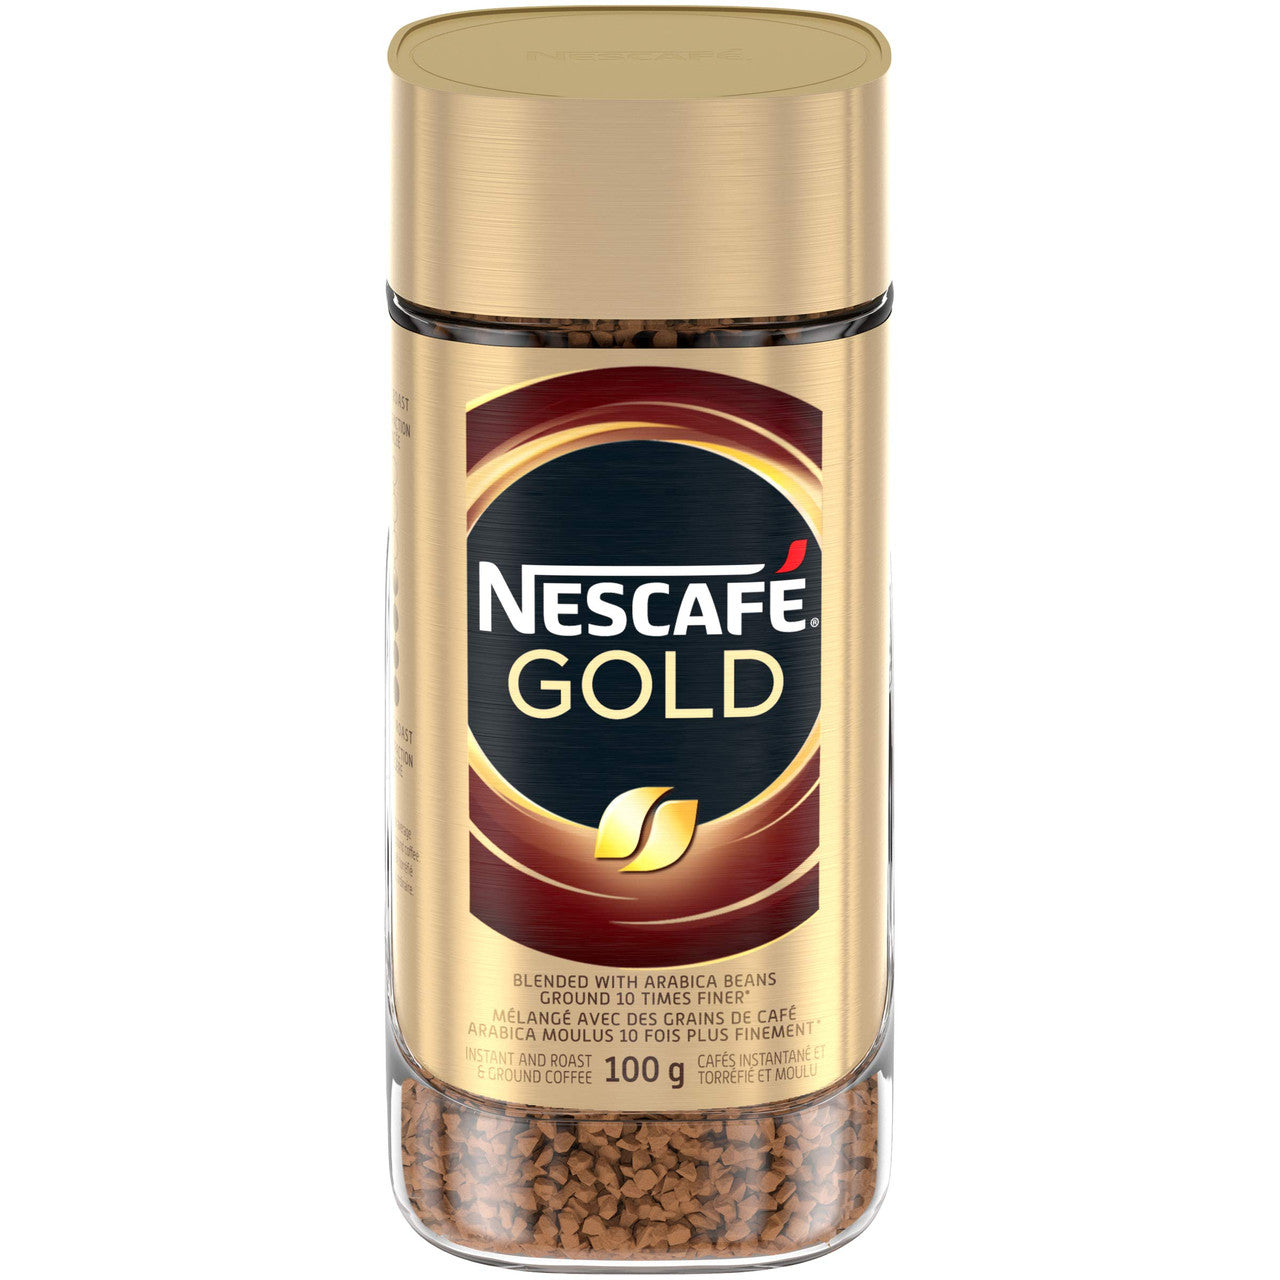 NESCAFE Gold Instant & Roast & Ground Coffee, 100g/3.5oz., Jar, {Imported from Canada}